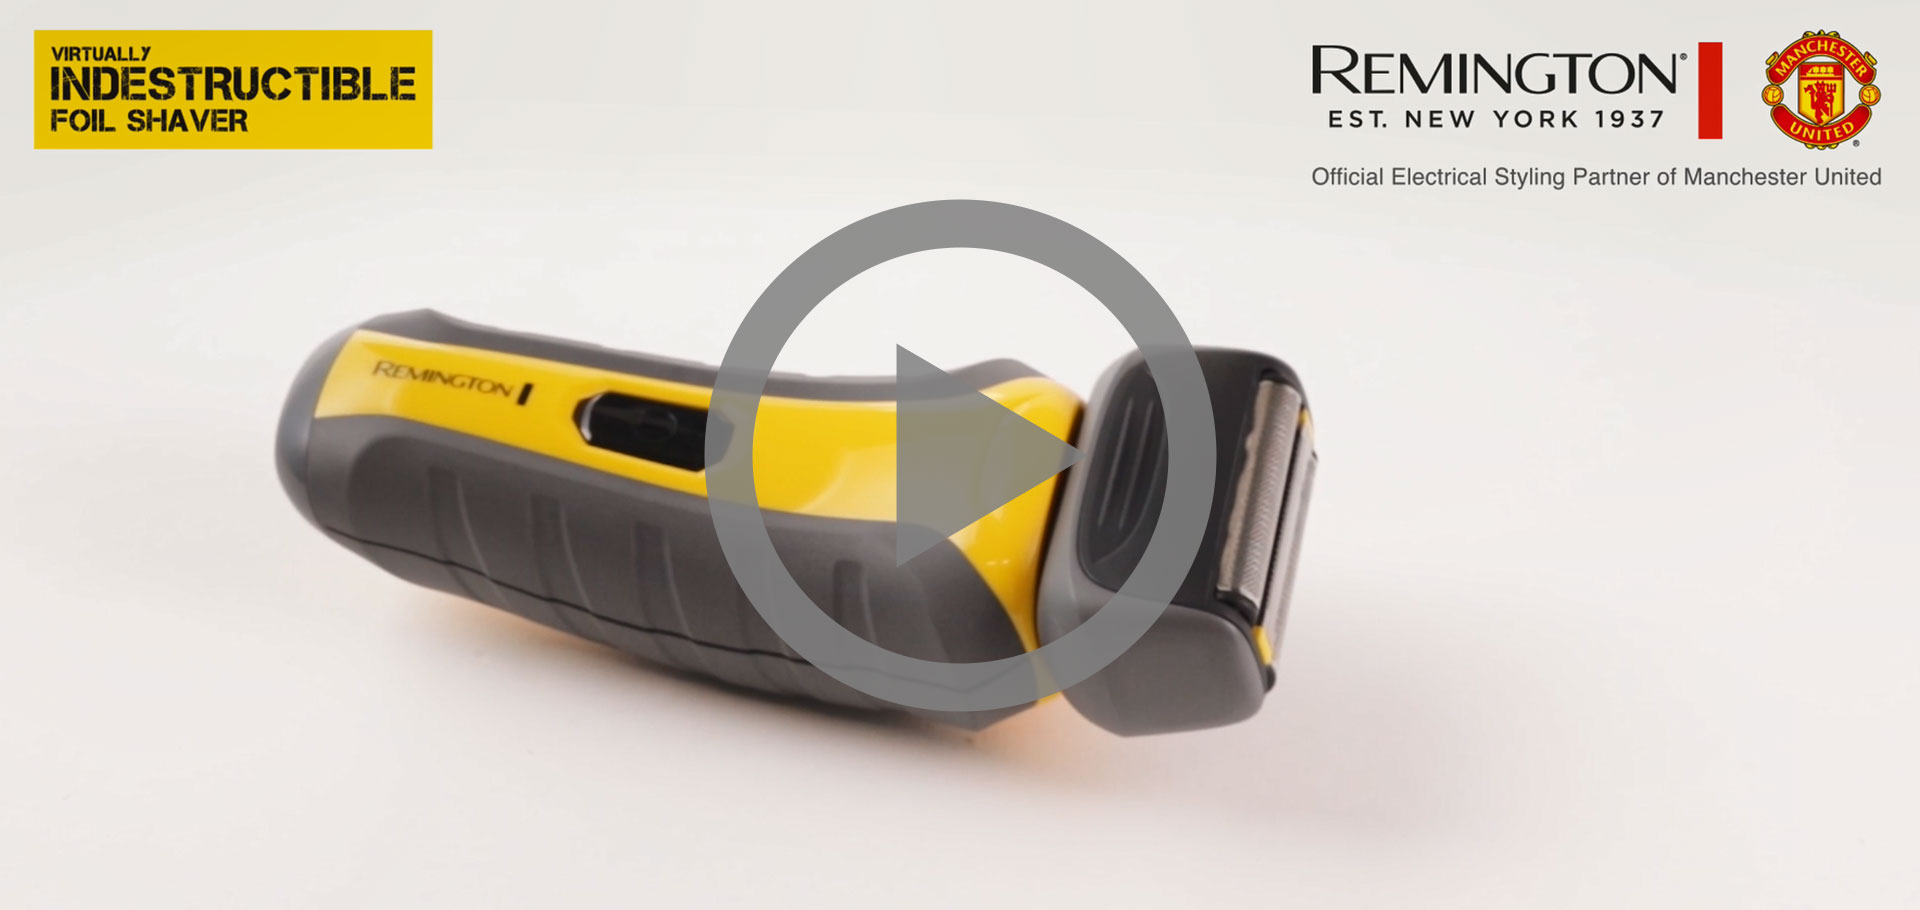 Shaver Foil Remington Virtually Indestructible |